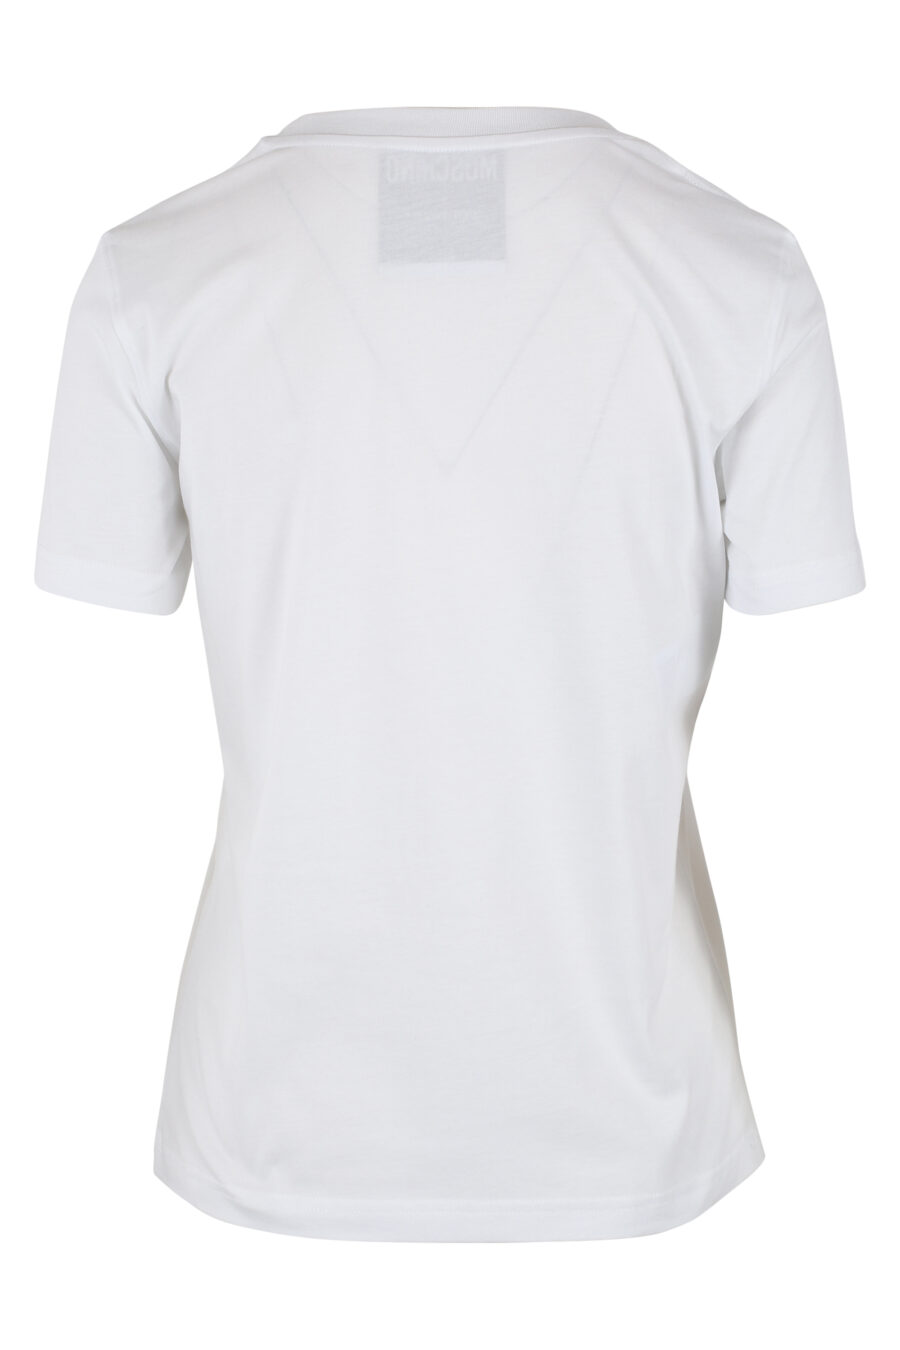 Camiseta blanca con logo "smiley" - IMG 5046 2